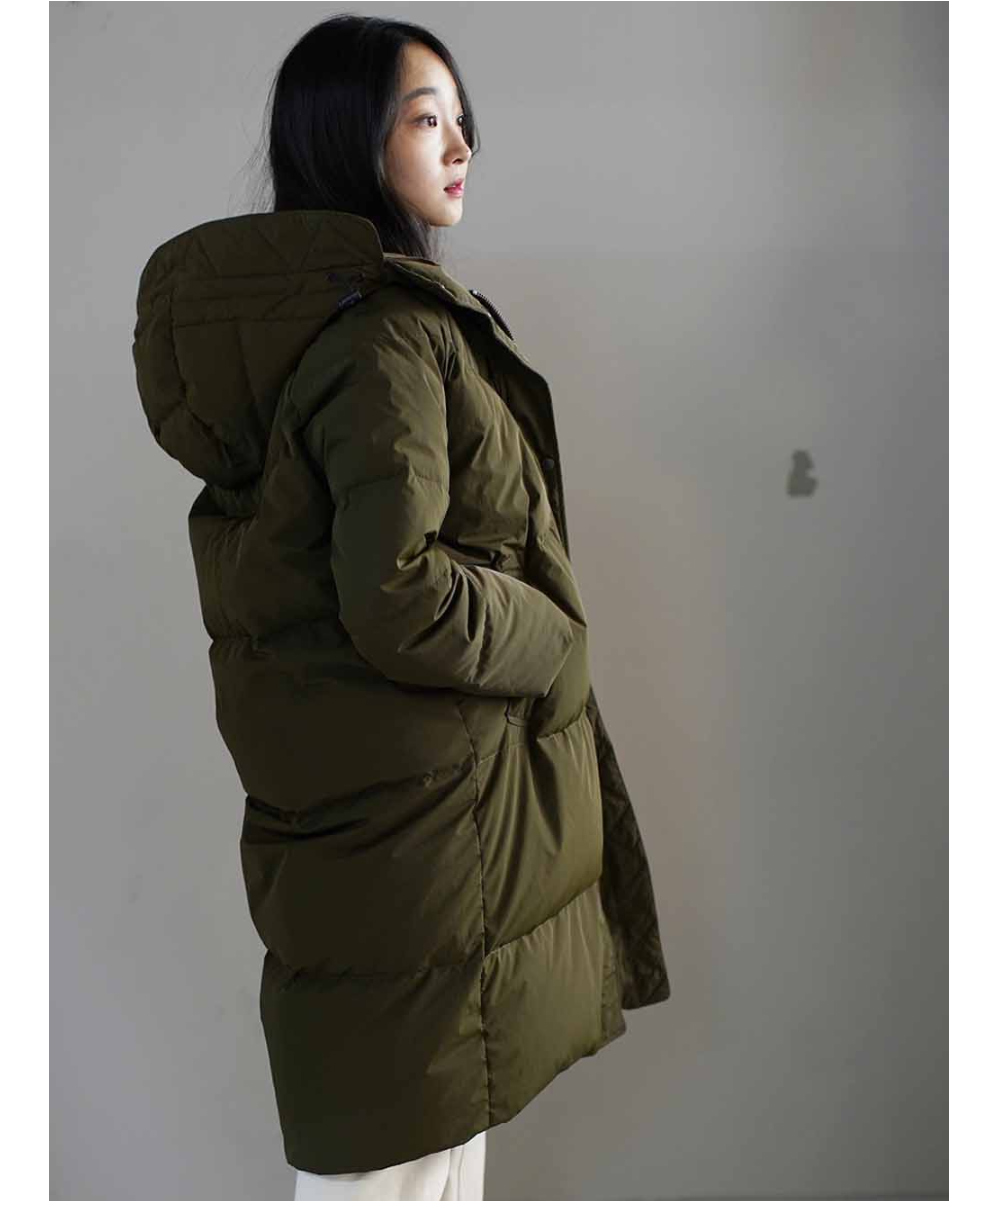 Down jacket model image-S1L11